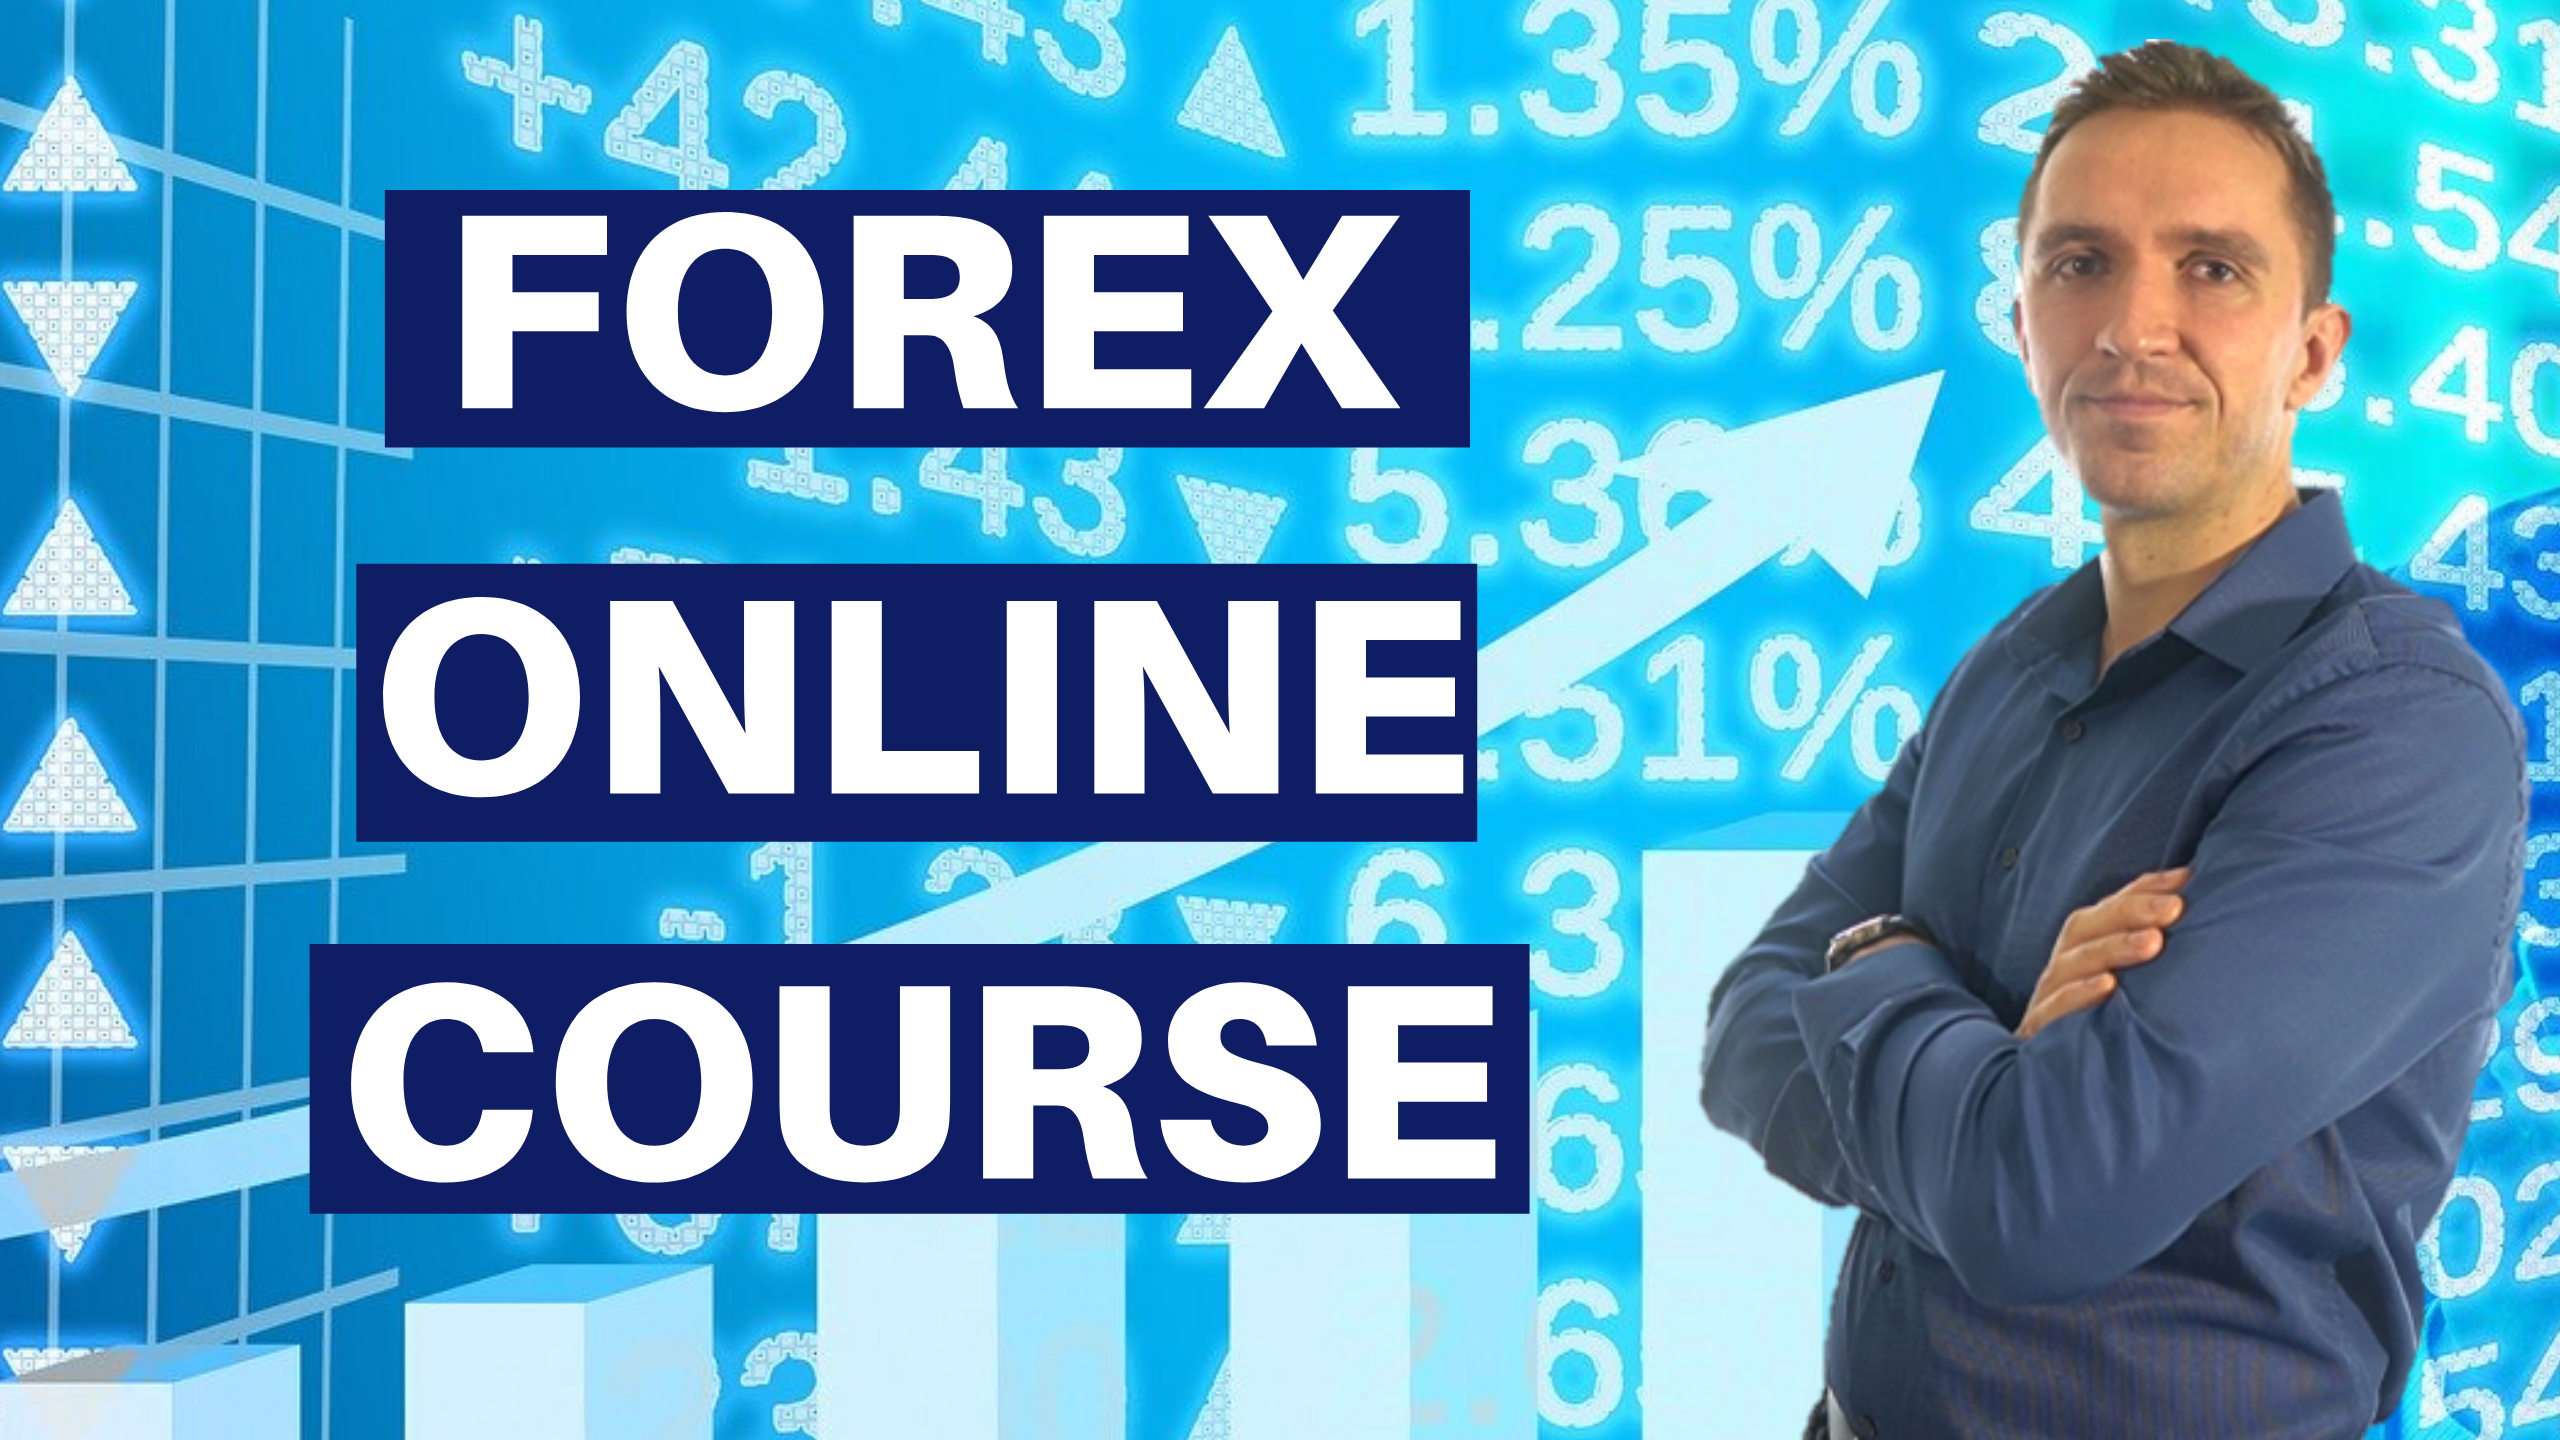 Forex online course forex broker reviews fxcm metatrader